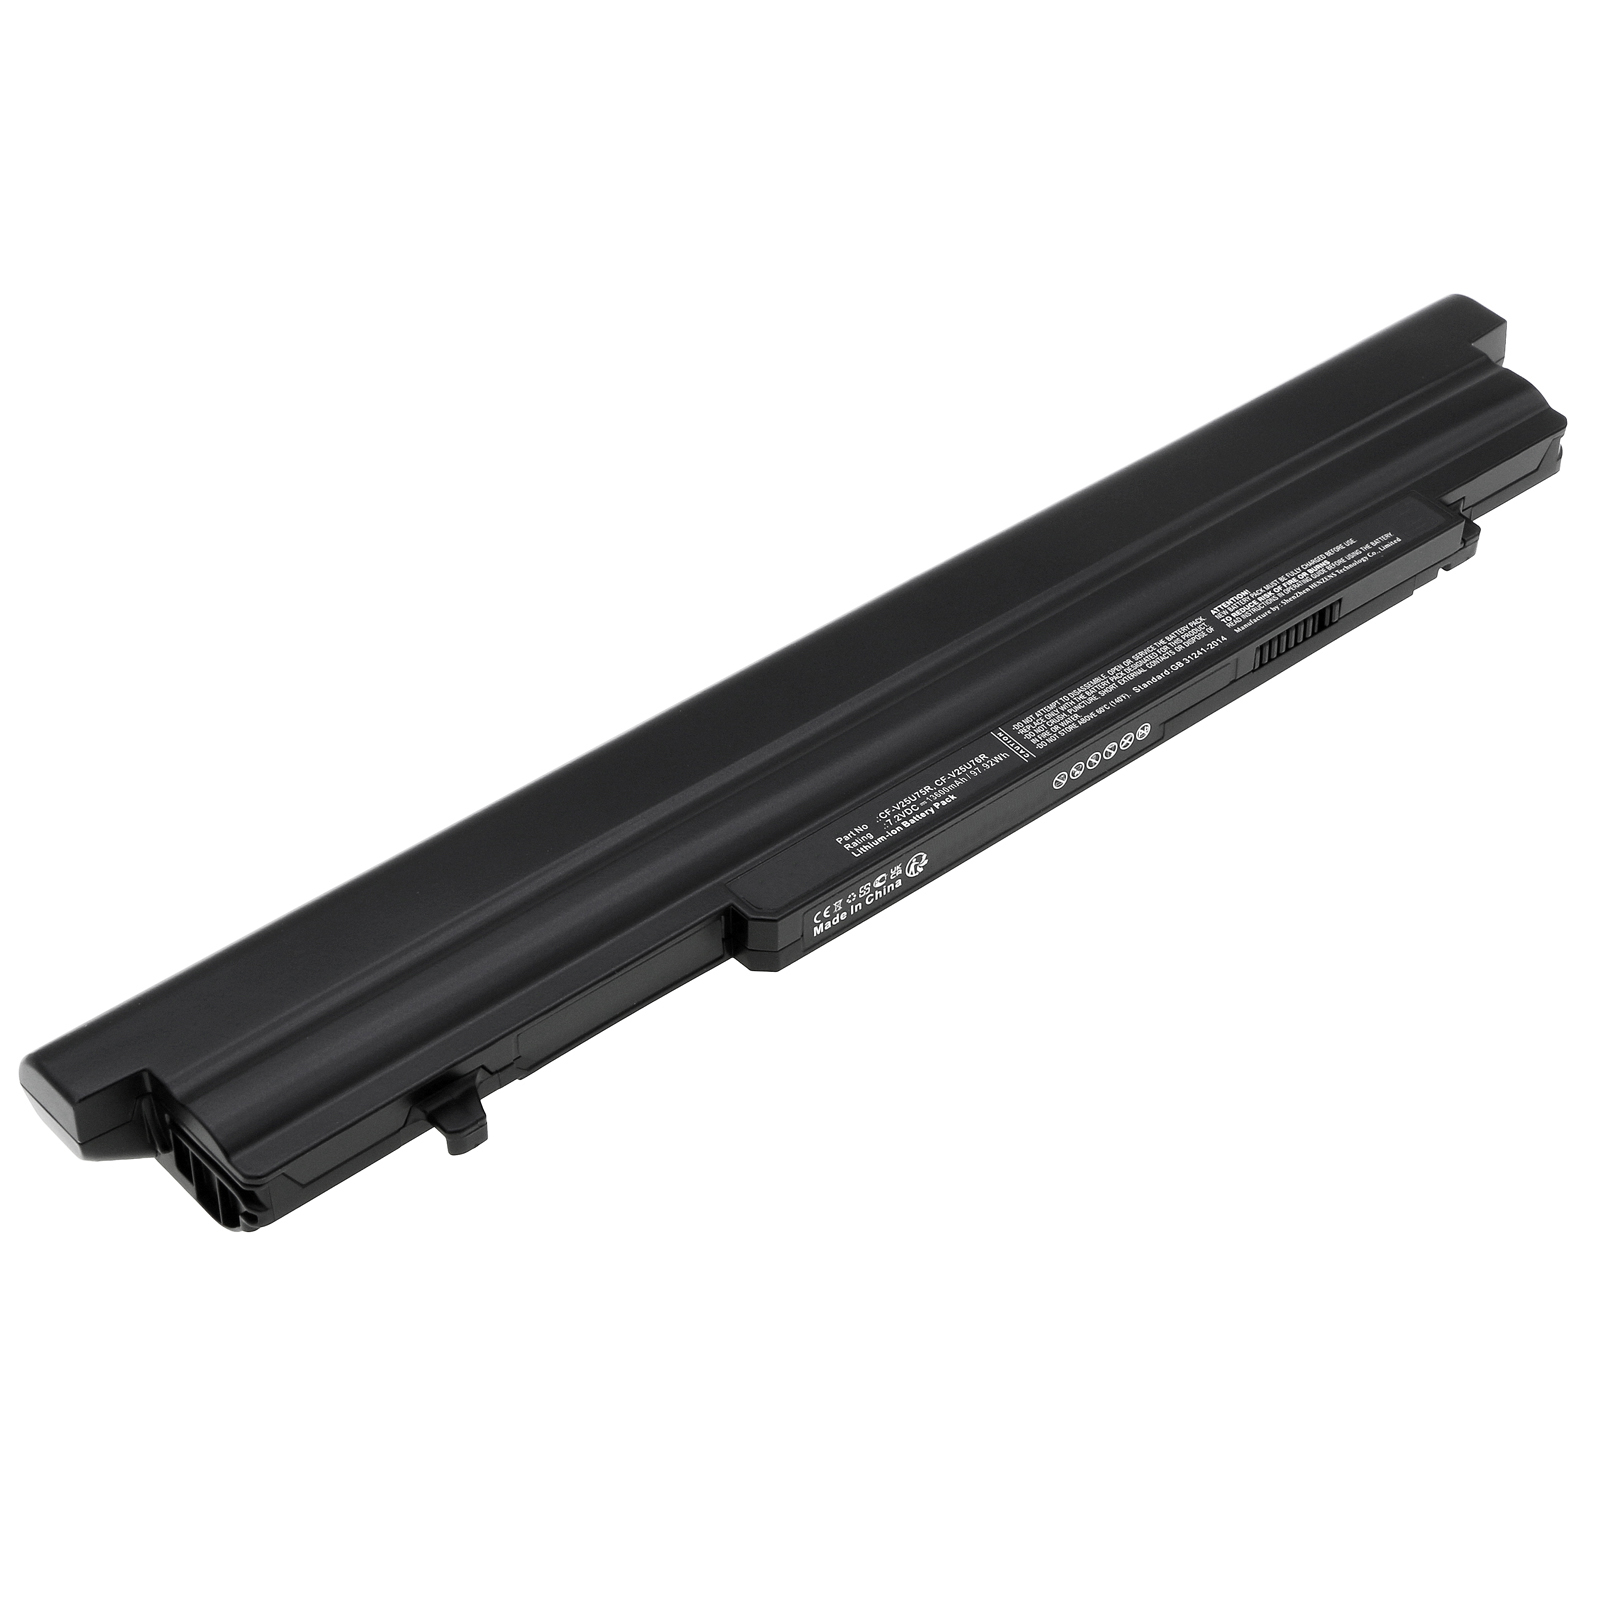 Synergy Digital Laptop Battery, Compatible with Panasonic CF-V25U75R Laptop Battery (Li-ion, 7.2V, 13600mAh)